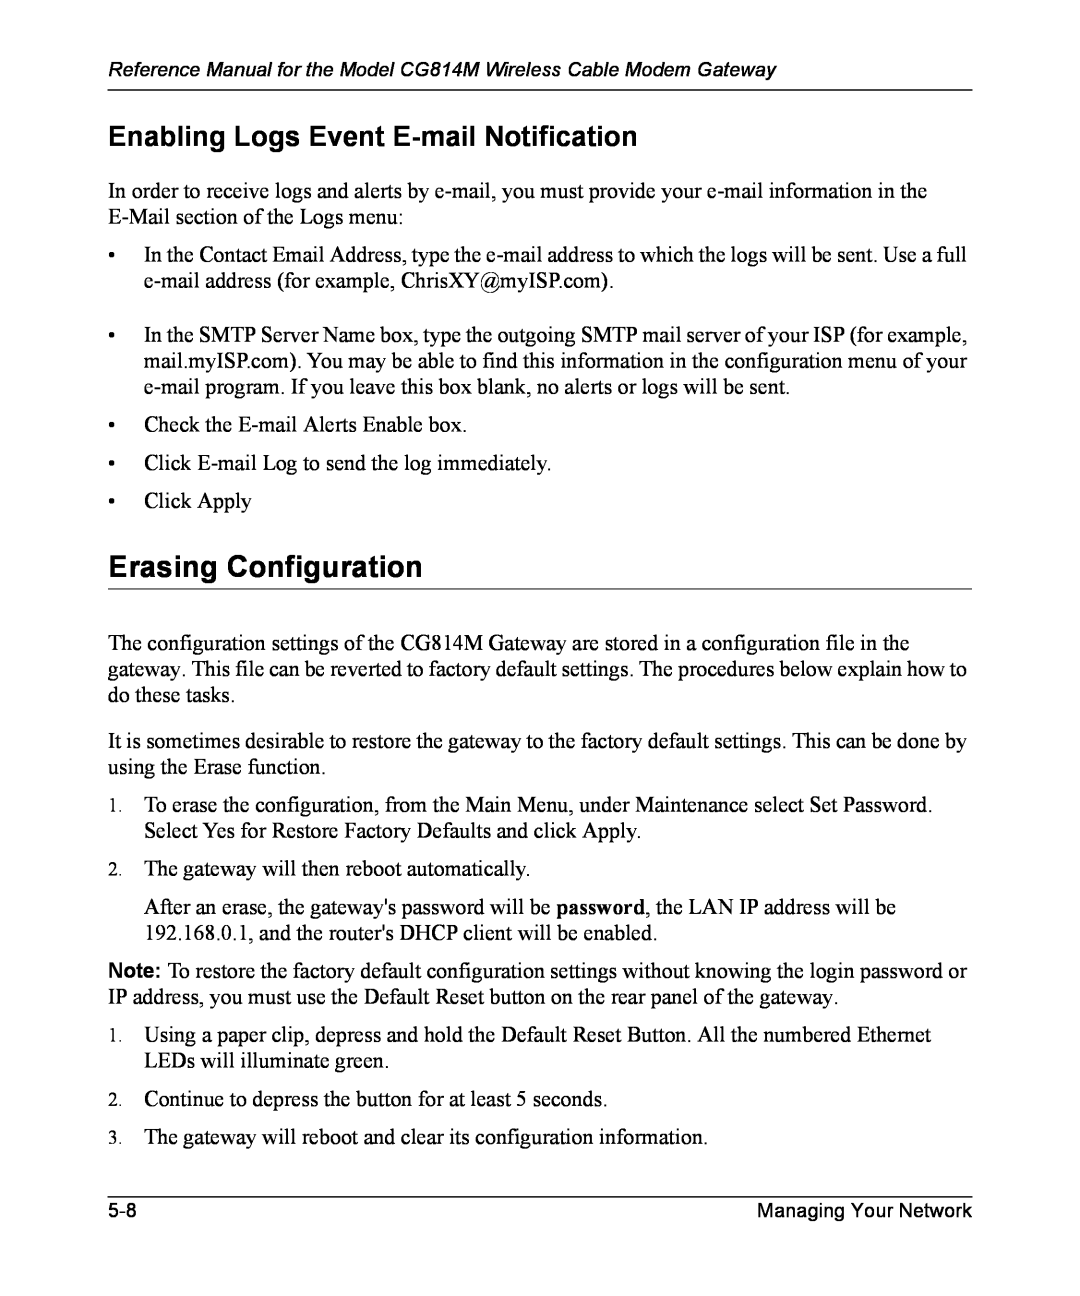 NETGEAR CG814M manual Erasing Configuration, Enabling Logs Event E-mail Notification 